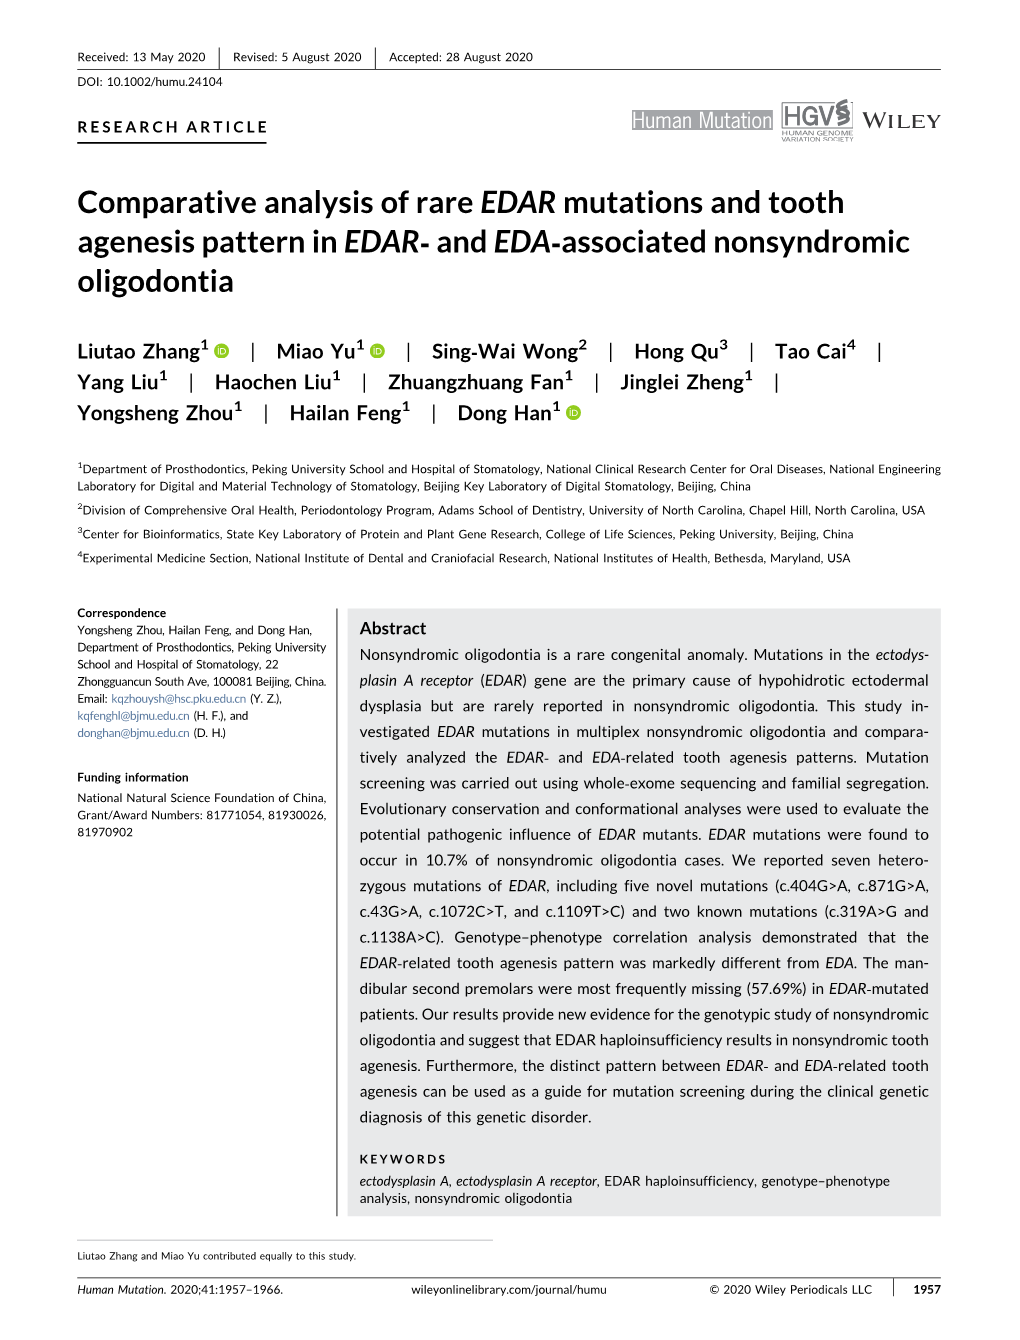 Comparative Analysis of Rare EDAR Mutations and Tooth Agenesis Pattern in EDAR‐ and EDA‐Associated Nonsyndromic Oligodontia